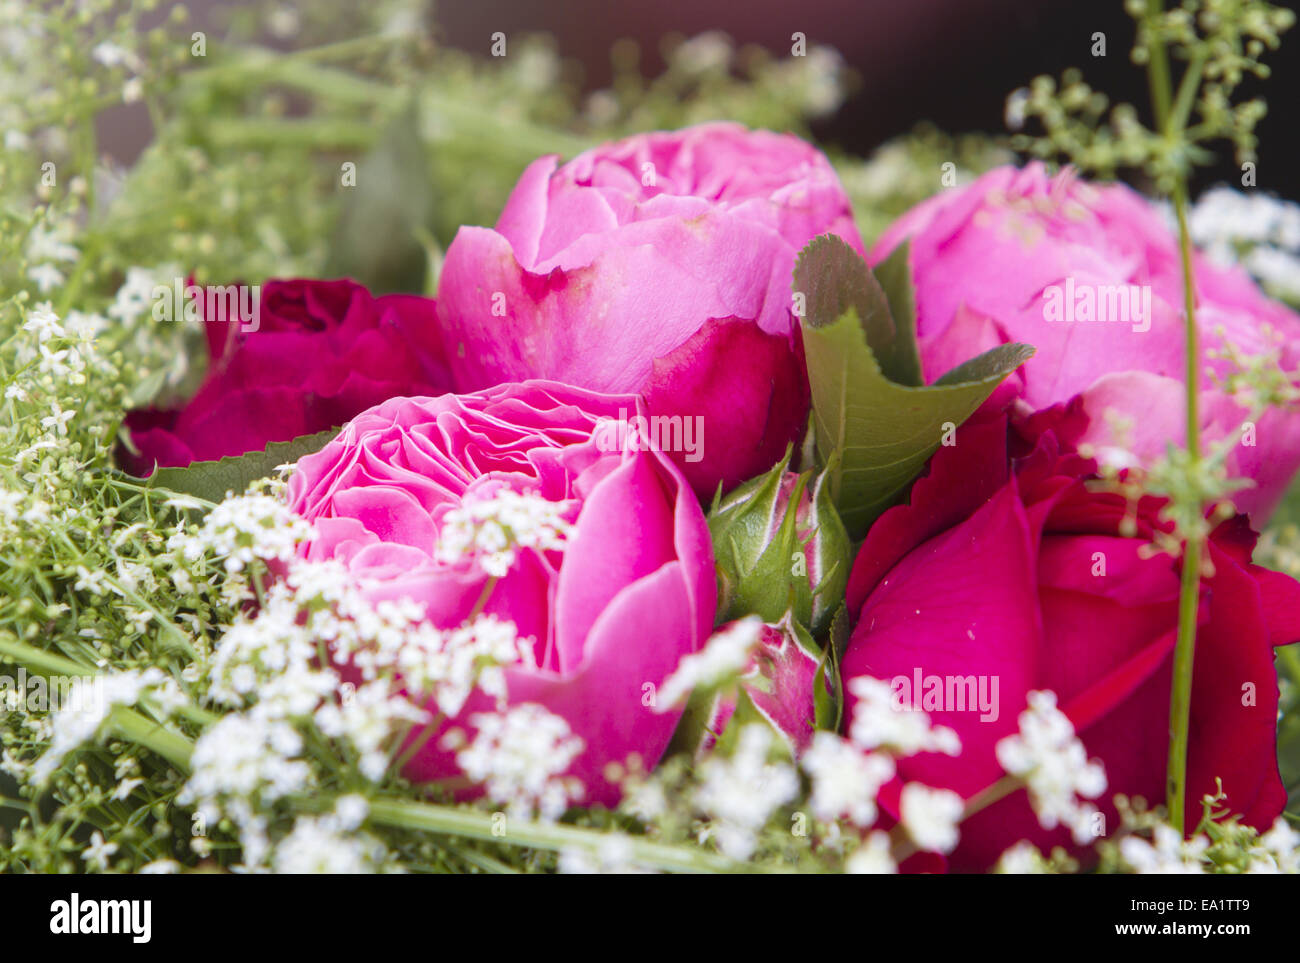 rose bouquet Stock Photo